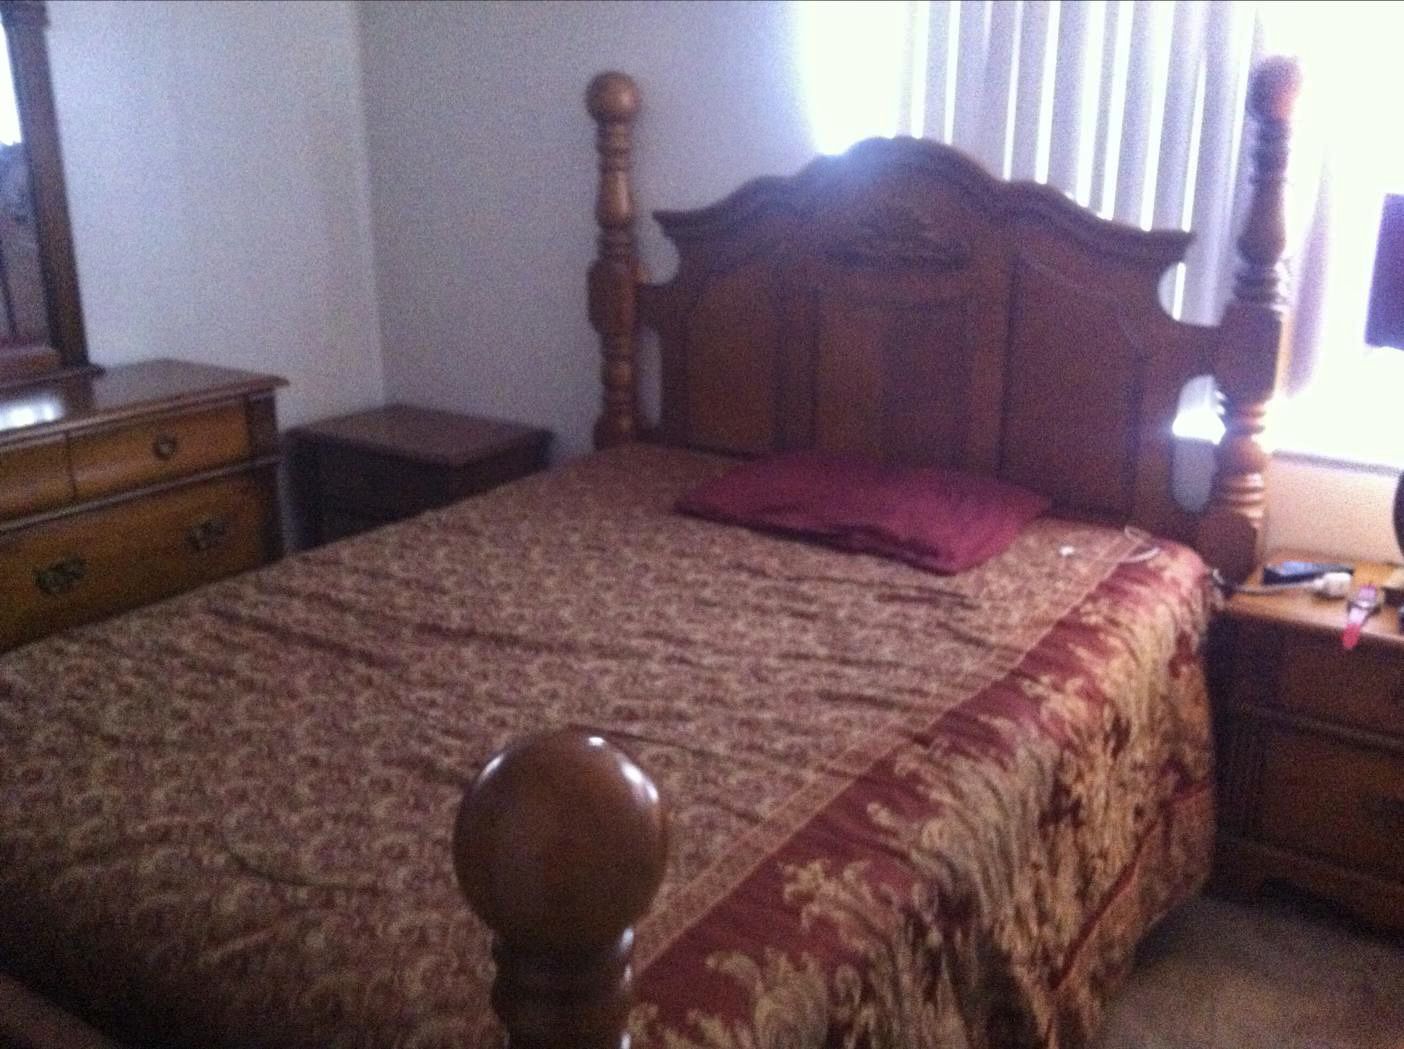 Brown Bedroom Set